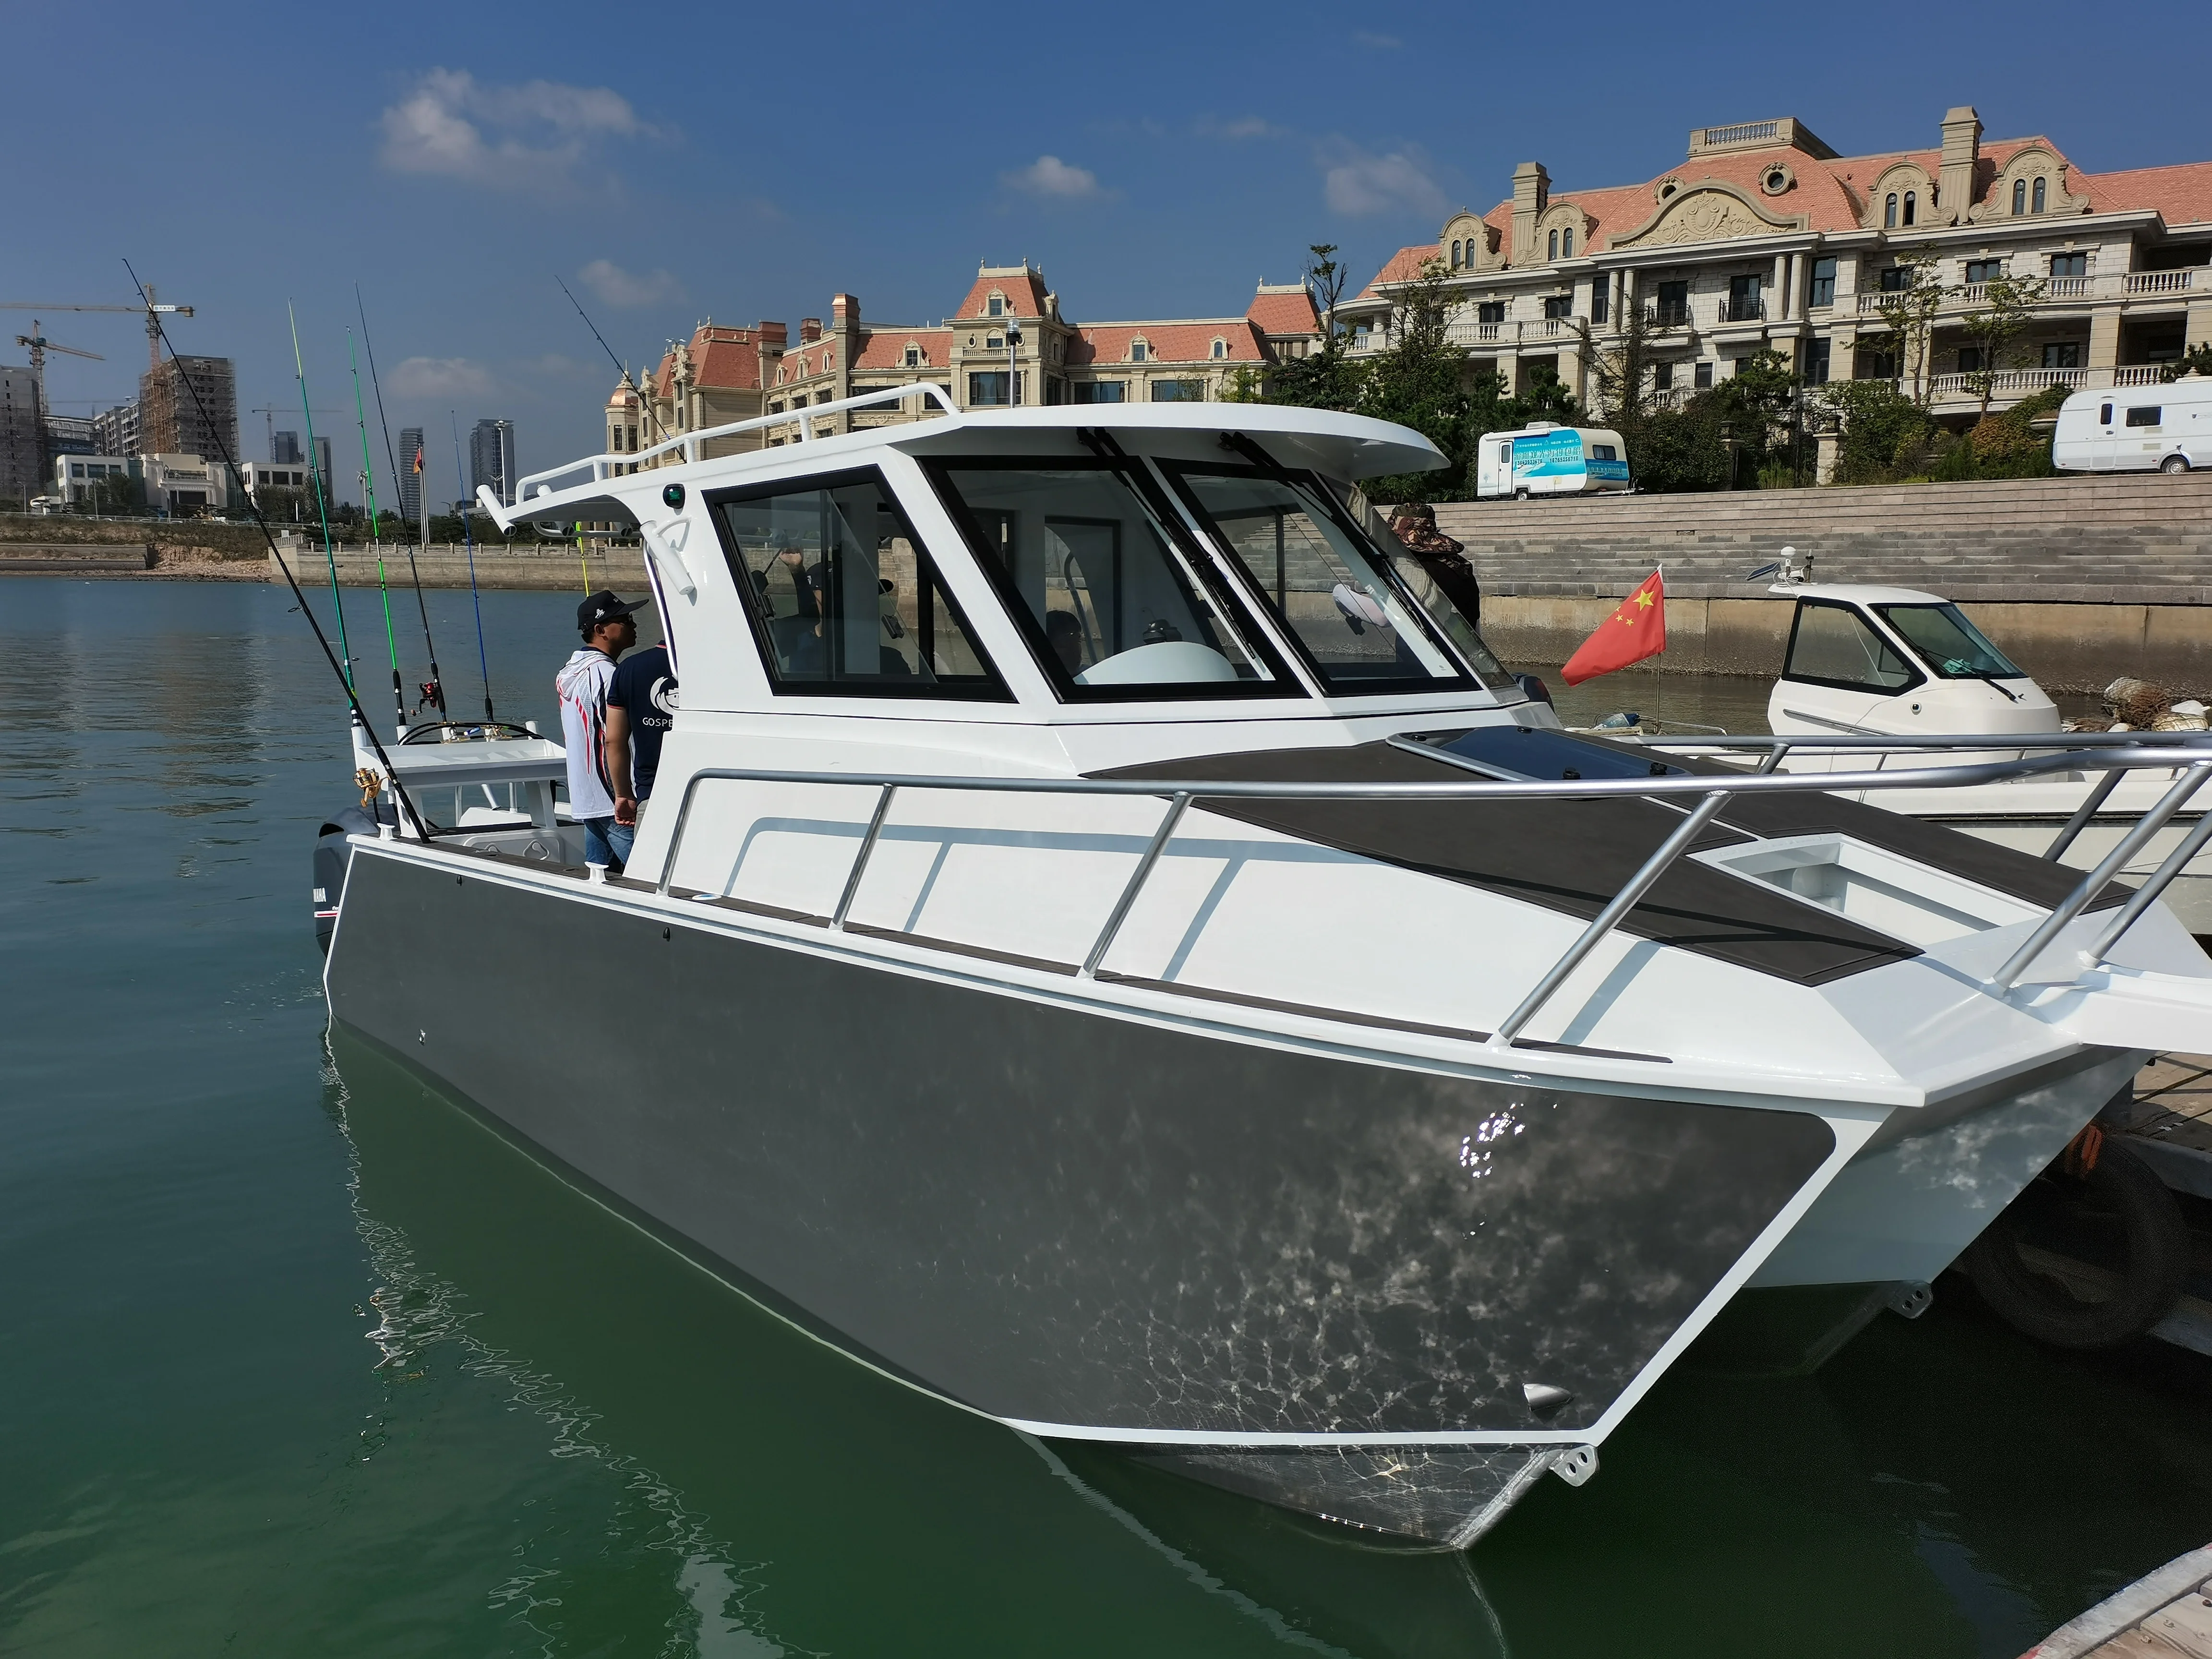 Gospel boat 2020 new model aluminum